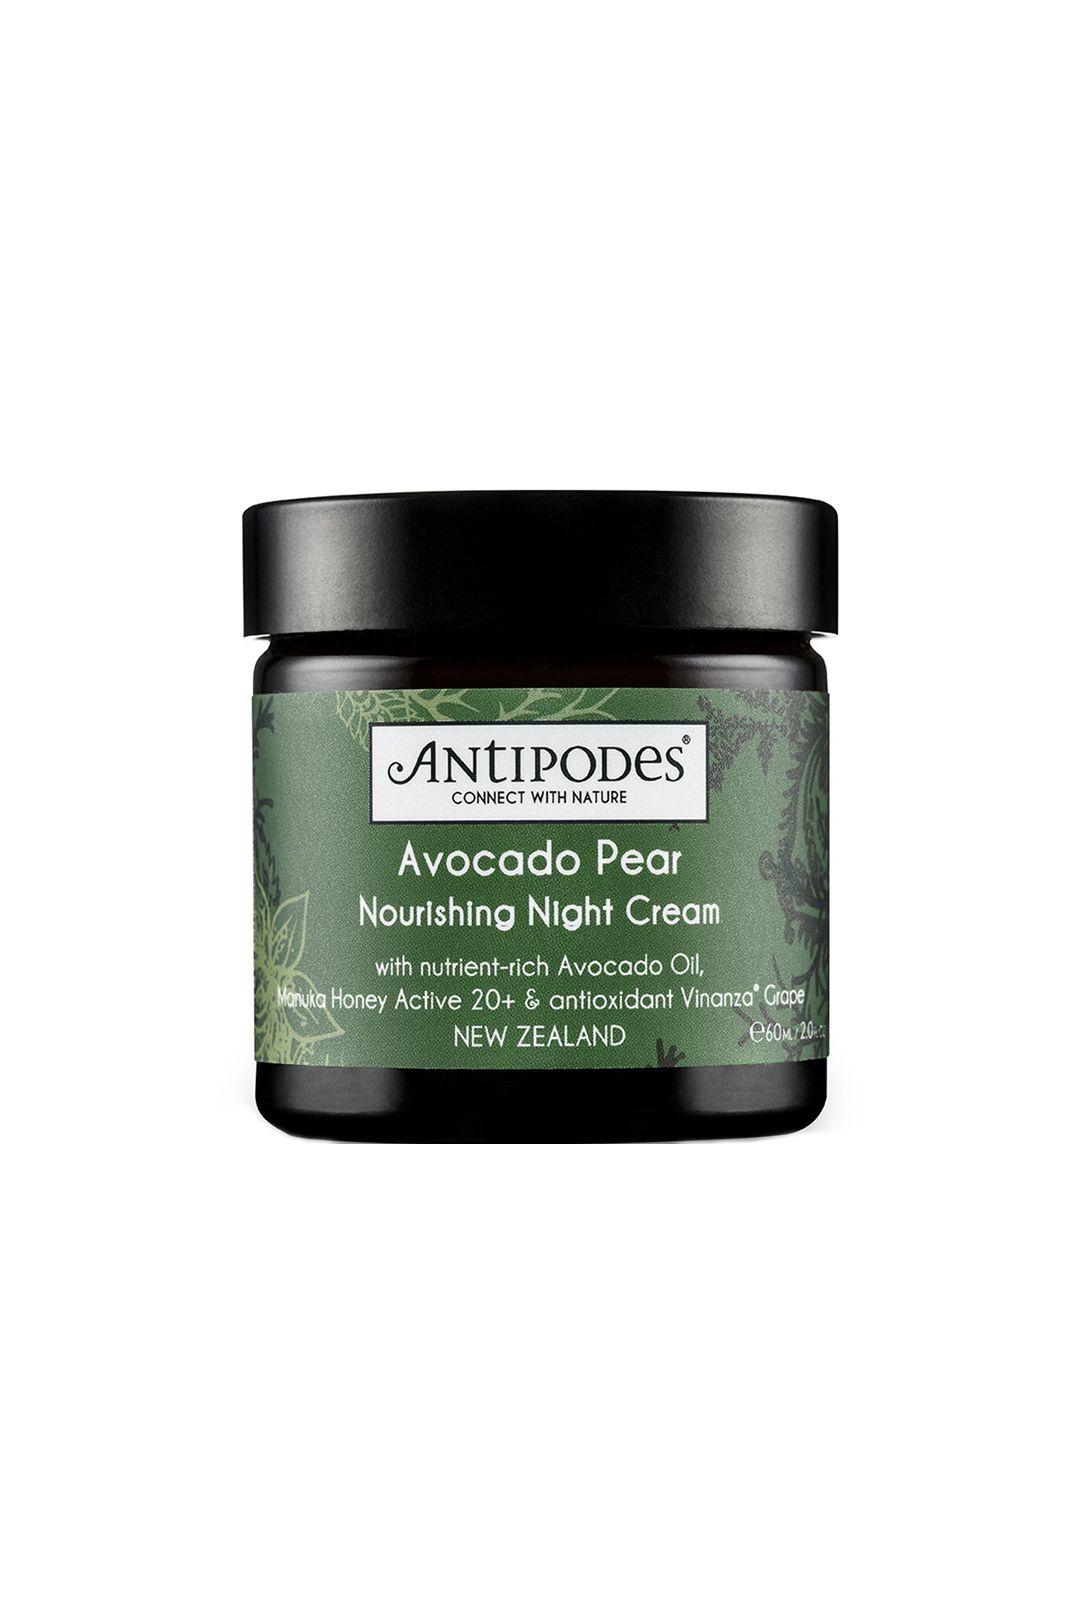 antipodes-avocado-pear-nourishing-night-cream-60ml